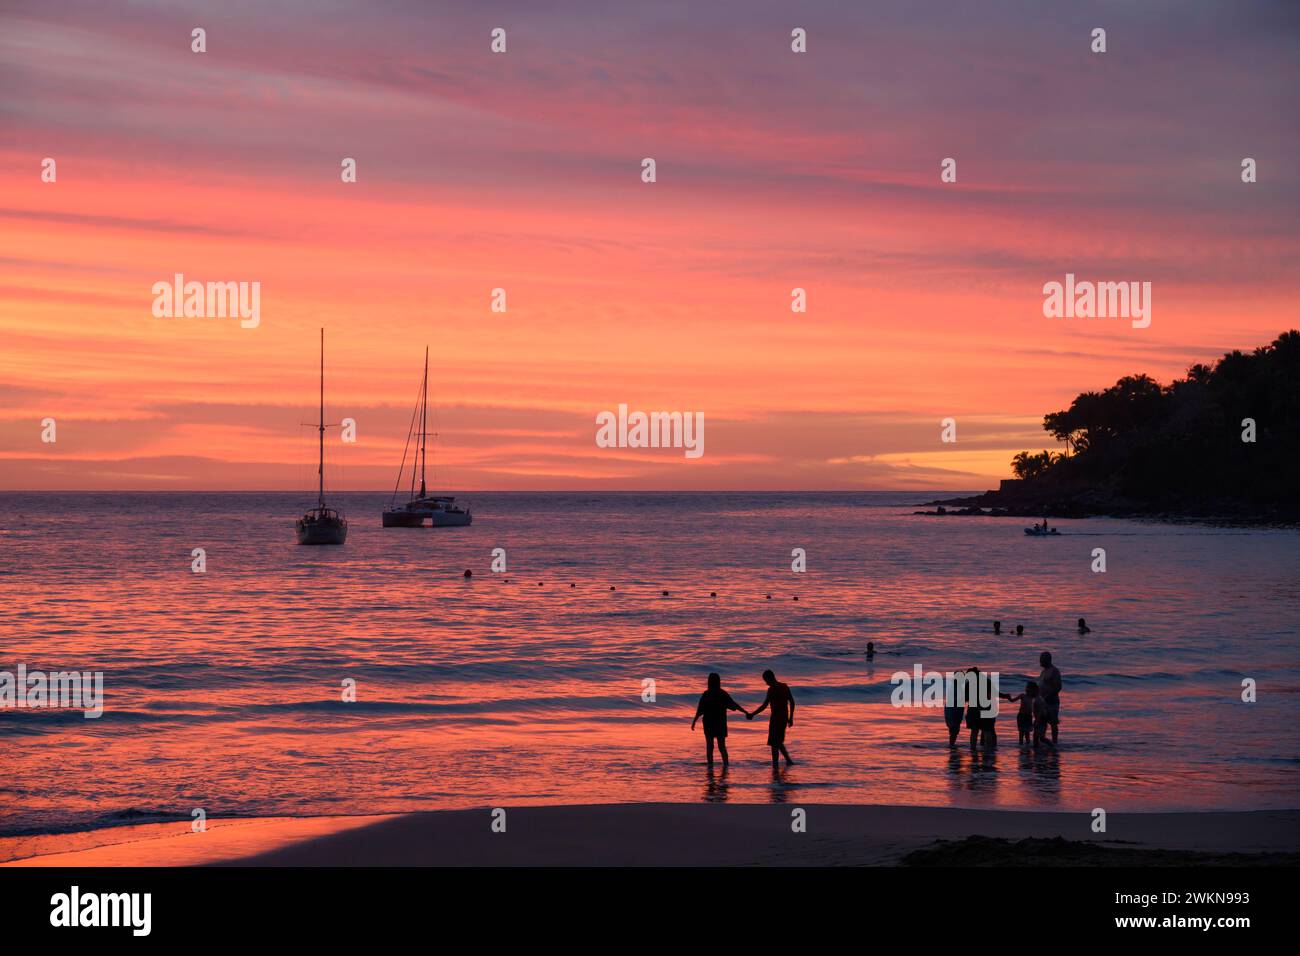 Beach and boats at sunset, Chacala, Nayarit, Mexico. Stock Photo